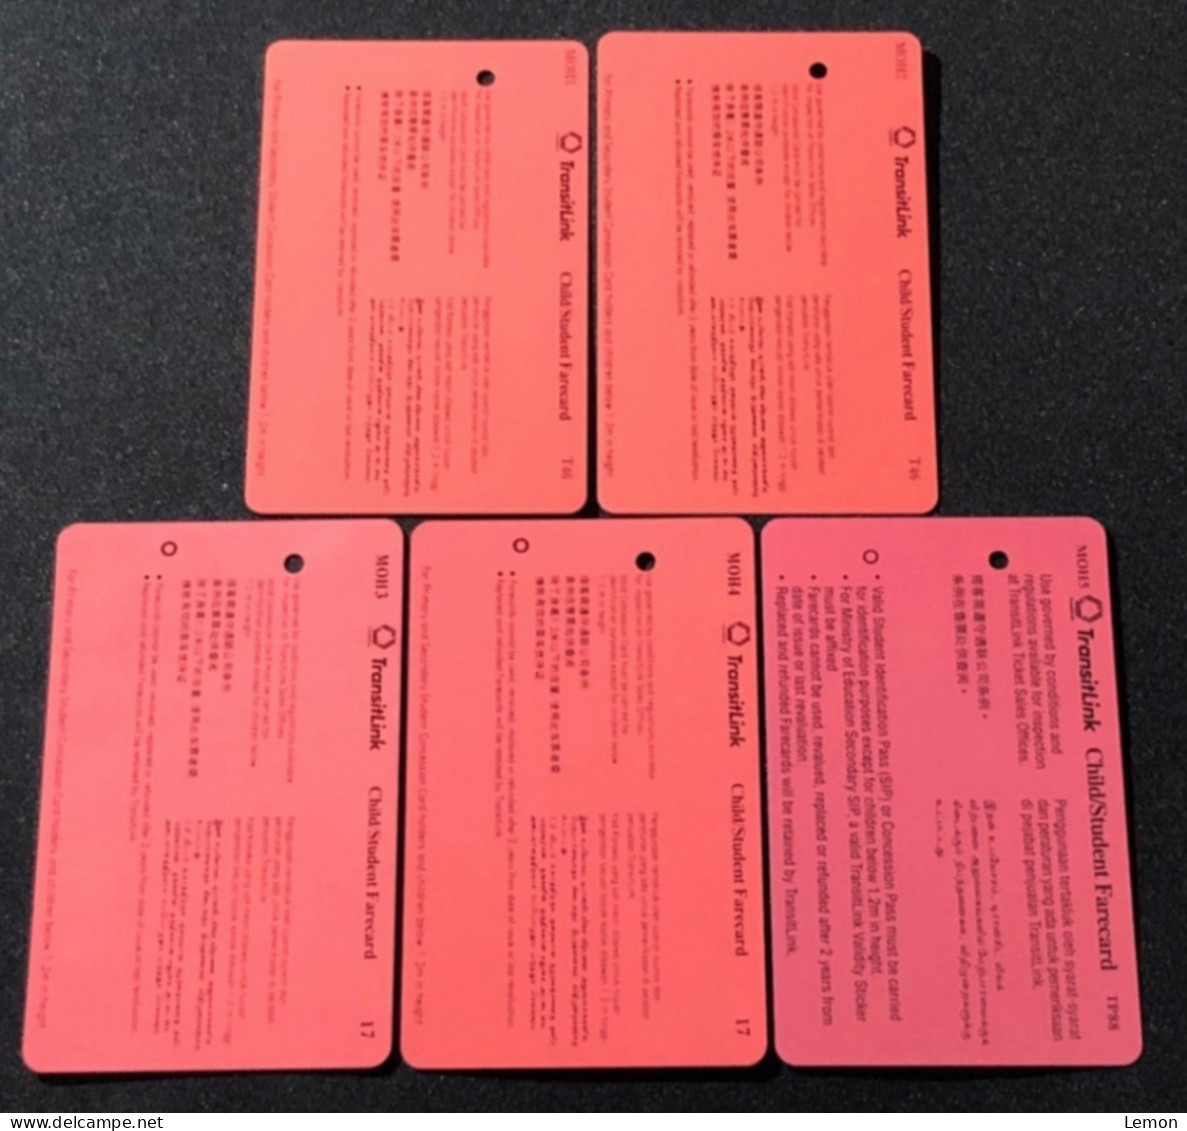 Singapore SMRT TransitLink Metro Train Subway Ticket Card, Stop Smoking, Set Of 5 Used Cards - Singapore